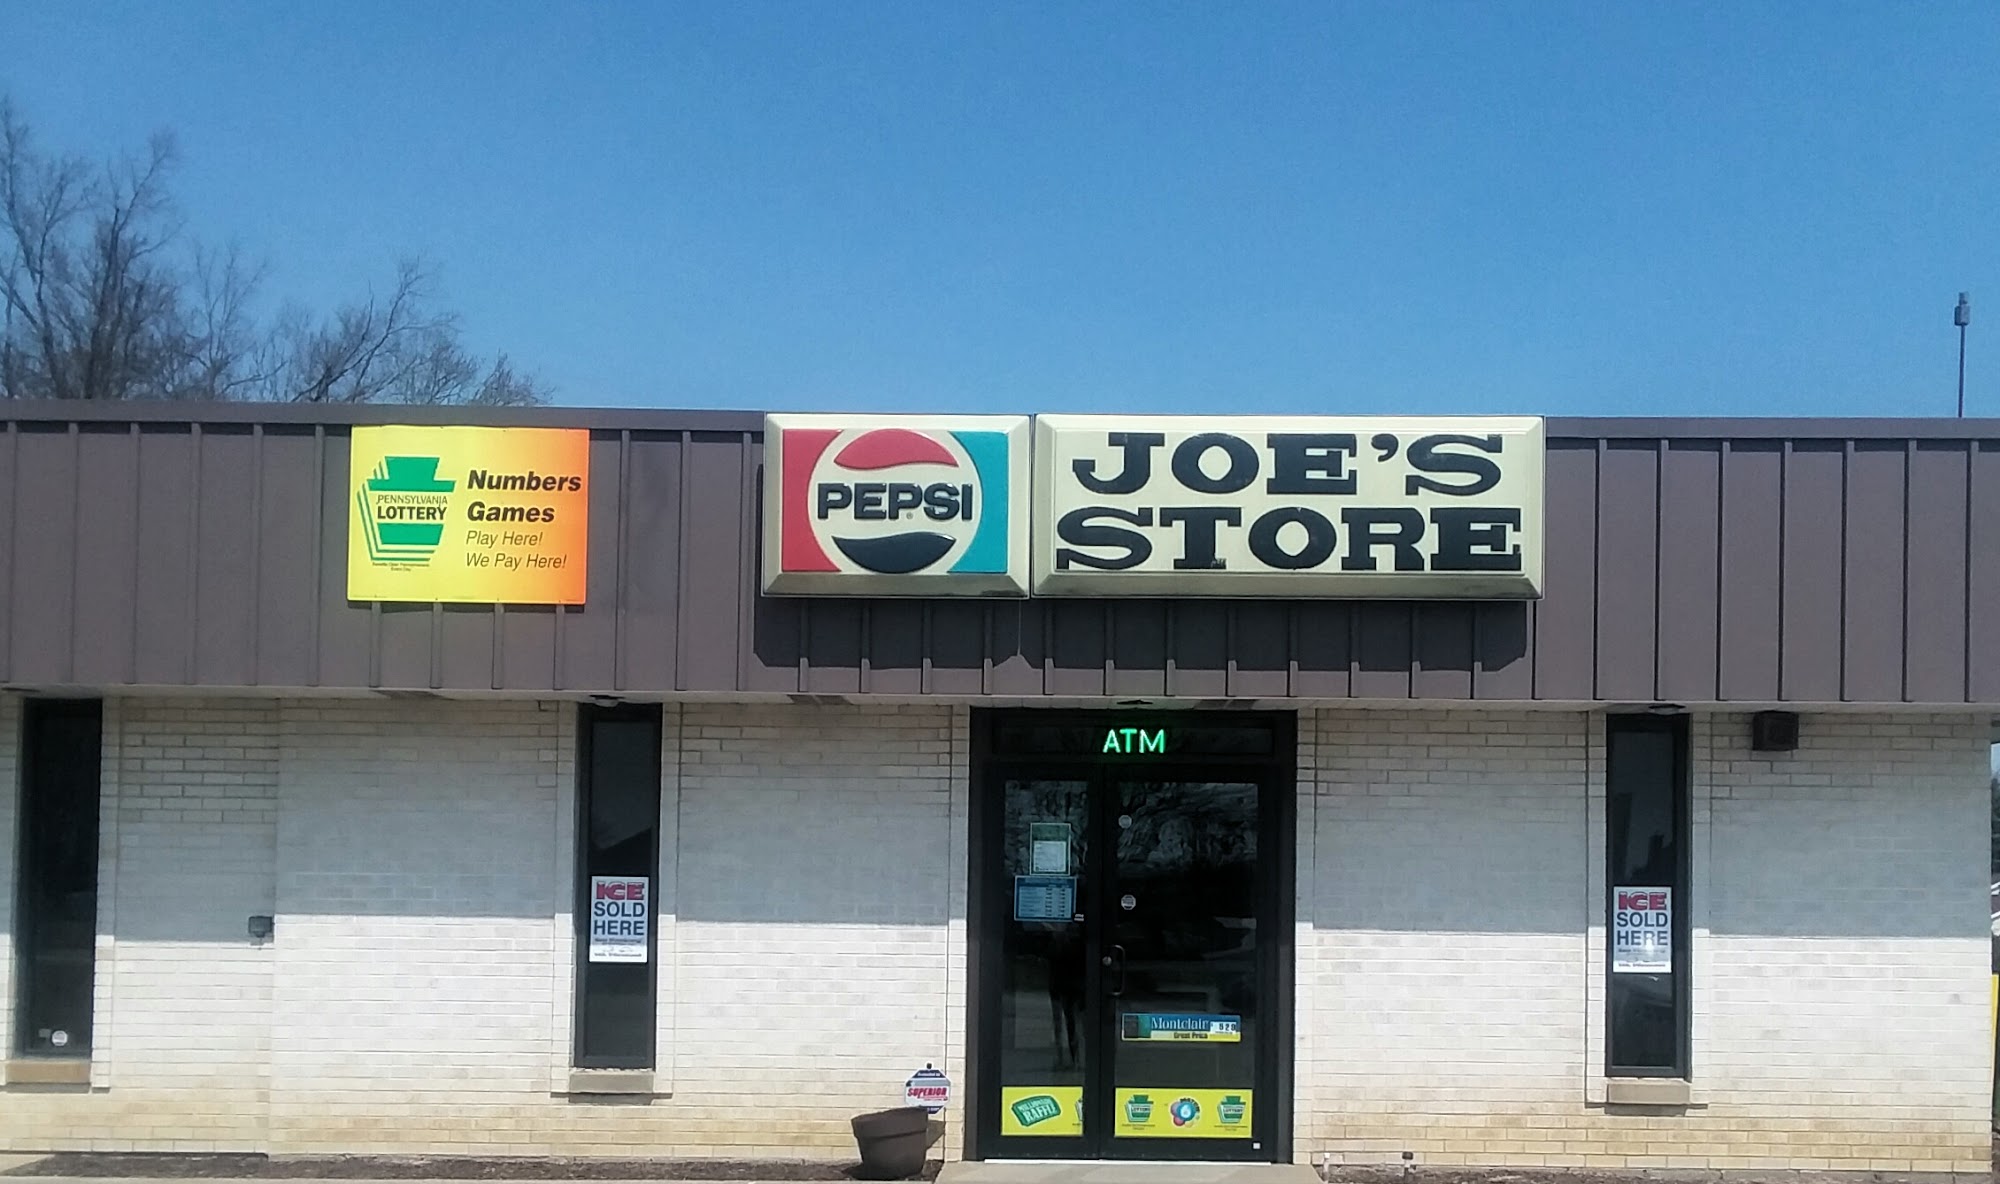 Joe's Store